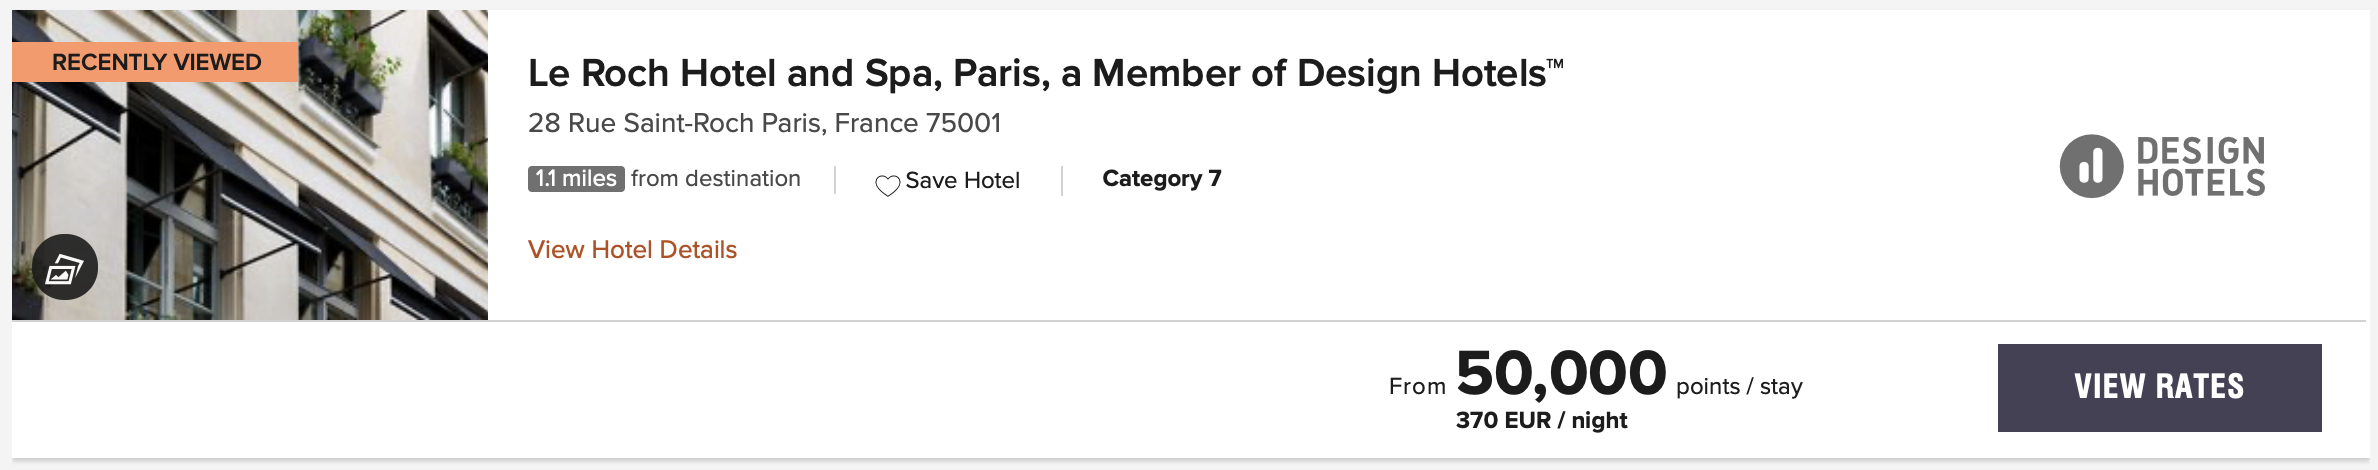 Le Roch off-peak award pricing on Marriott's website